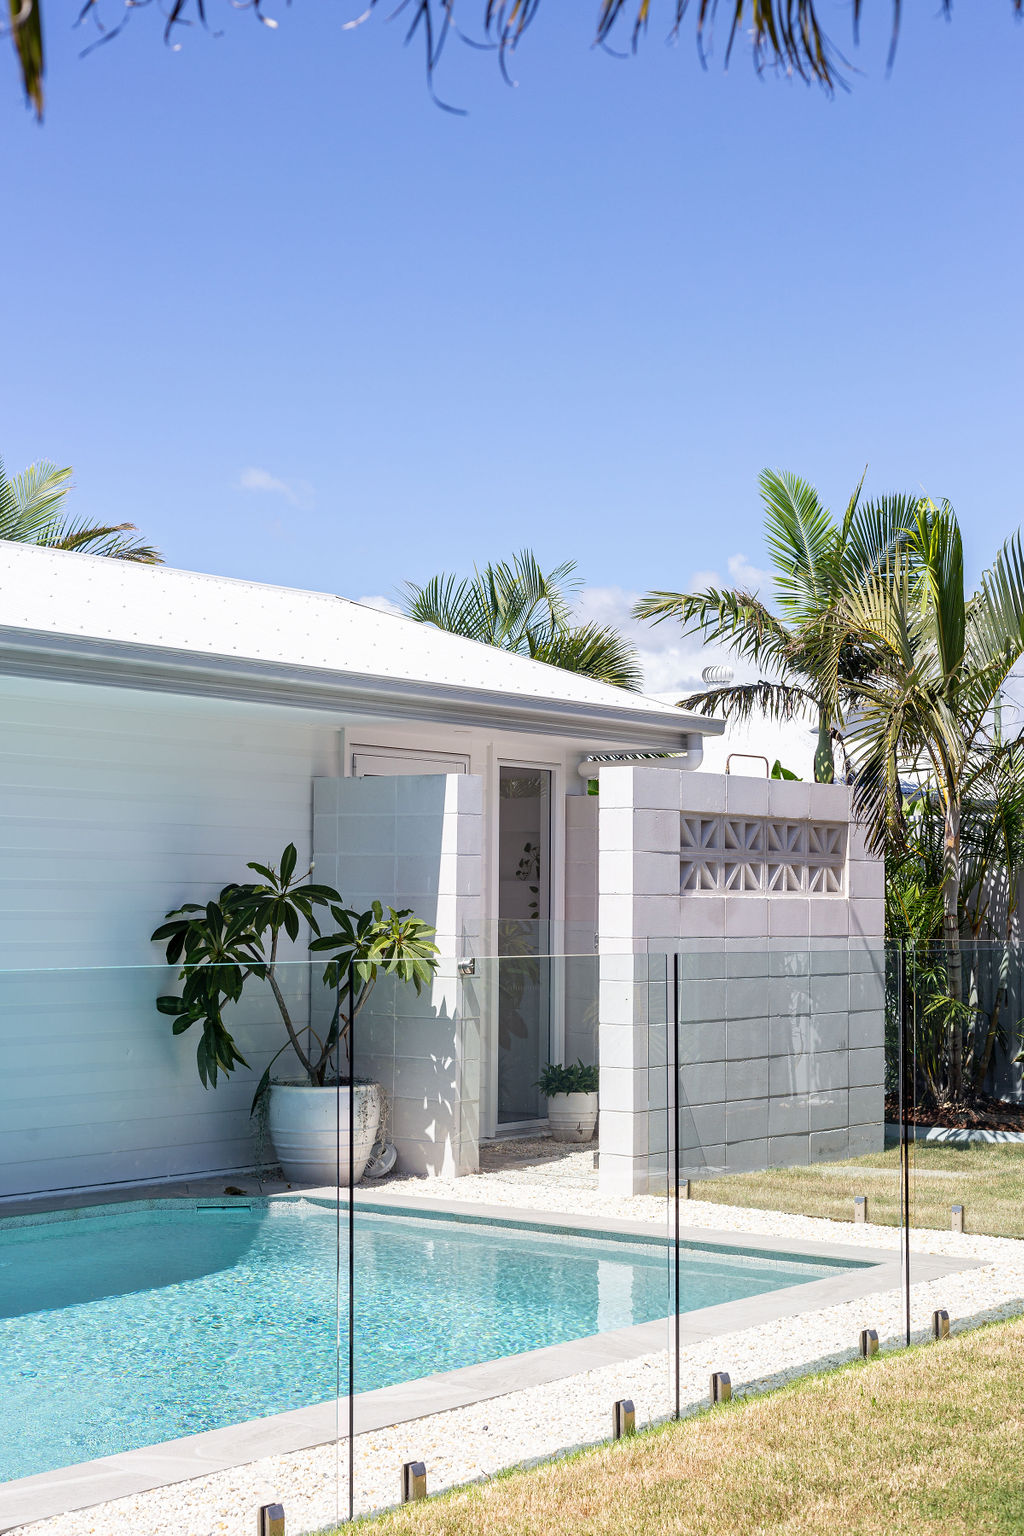 designer breezeblocks - outdoor shower and pool installations - best pool builders gold coast